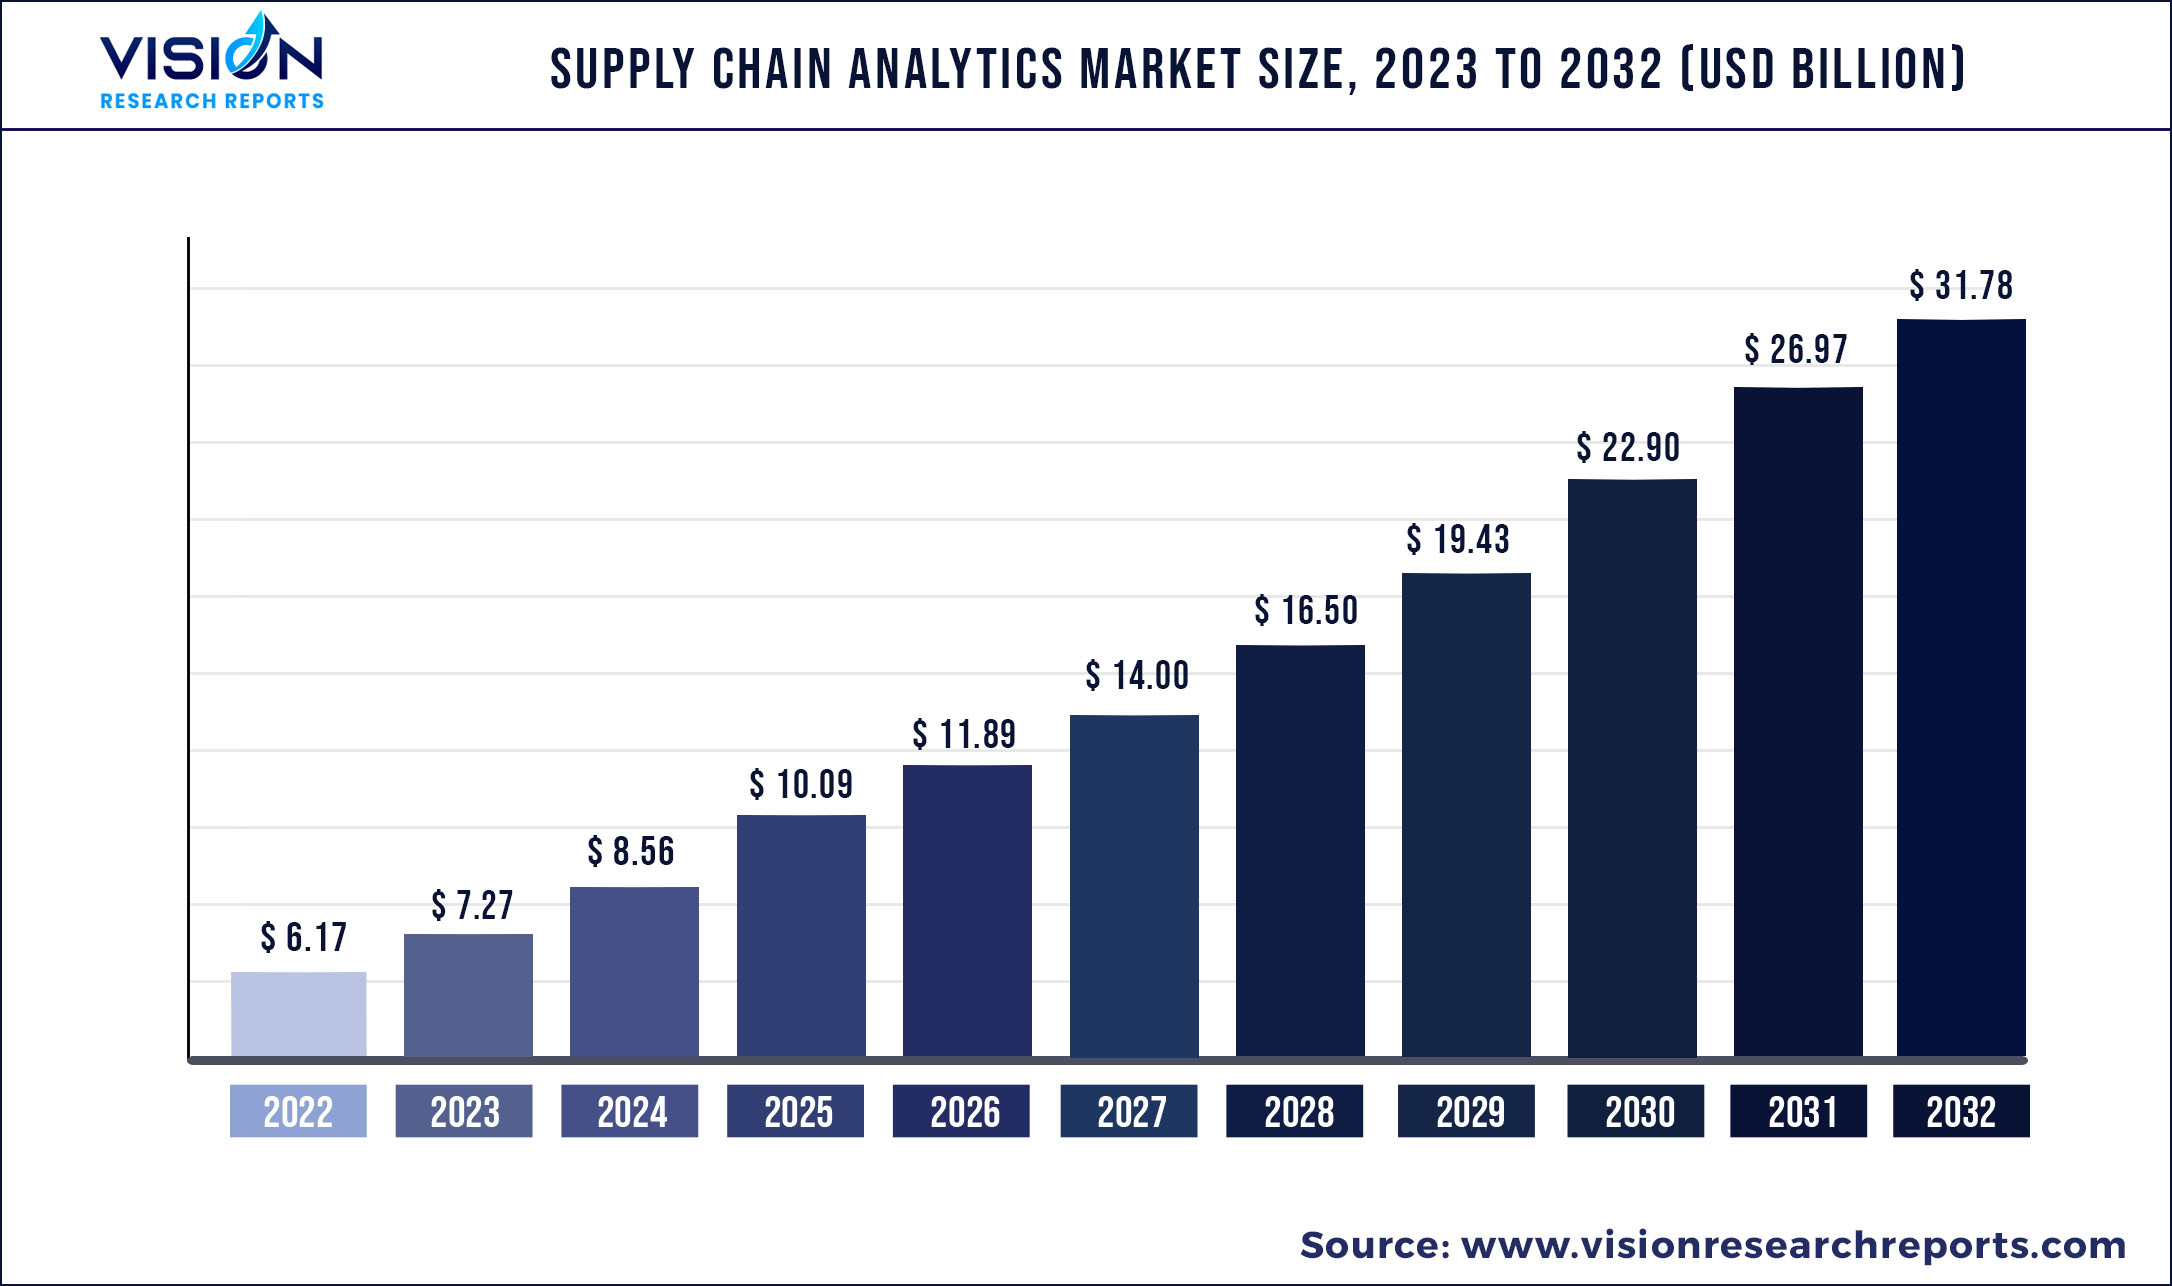 Supply Chain Analytics Market Size 2023 to 2032